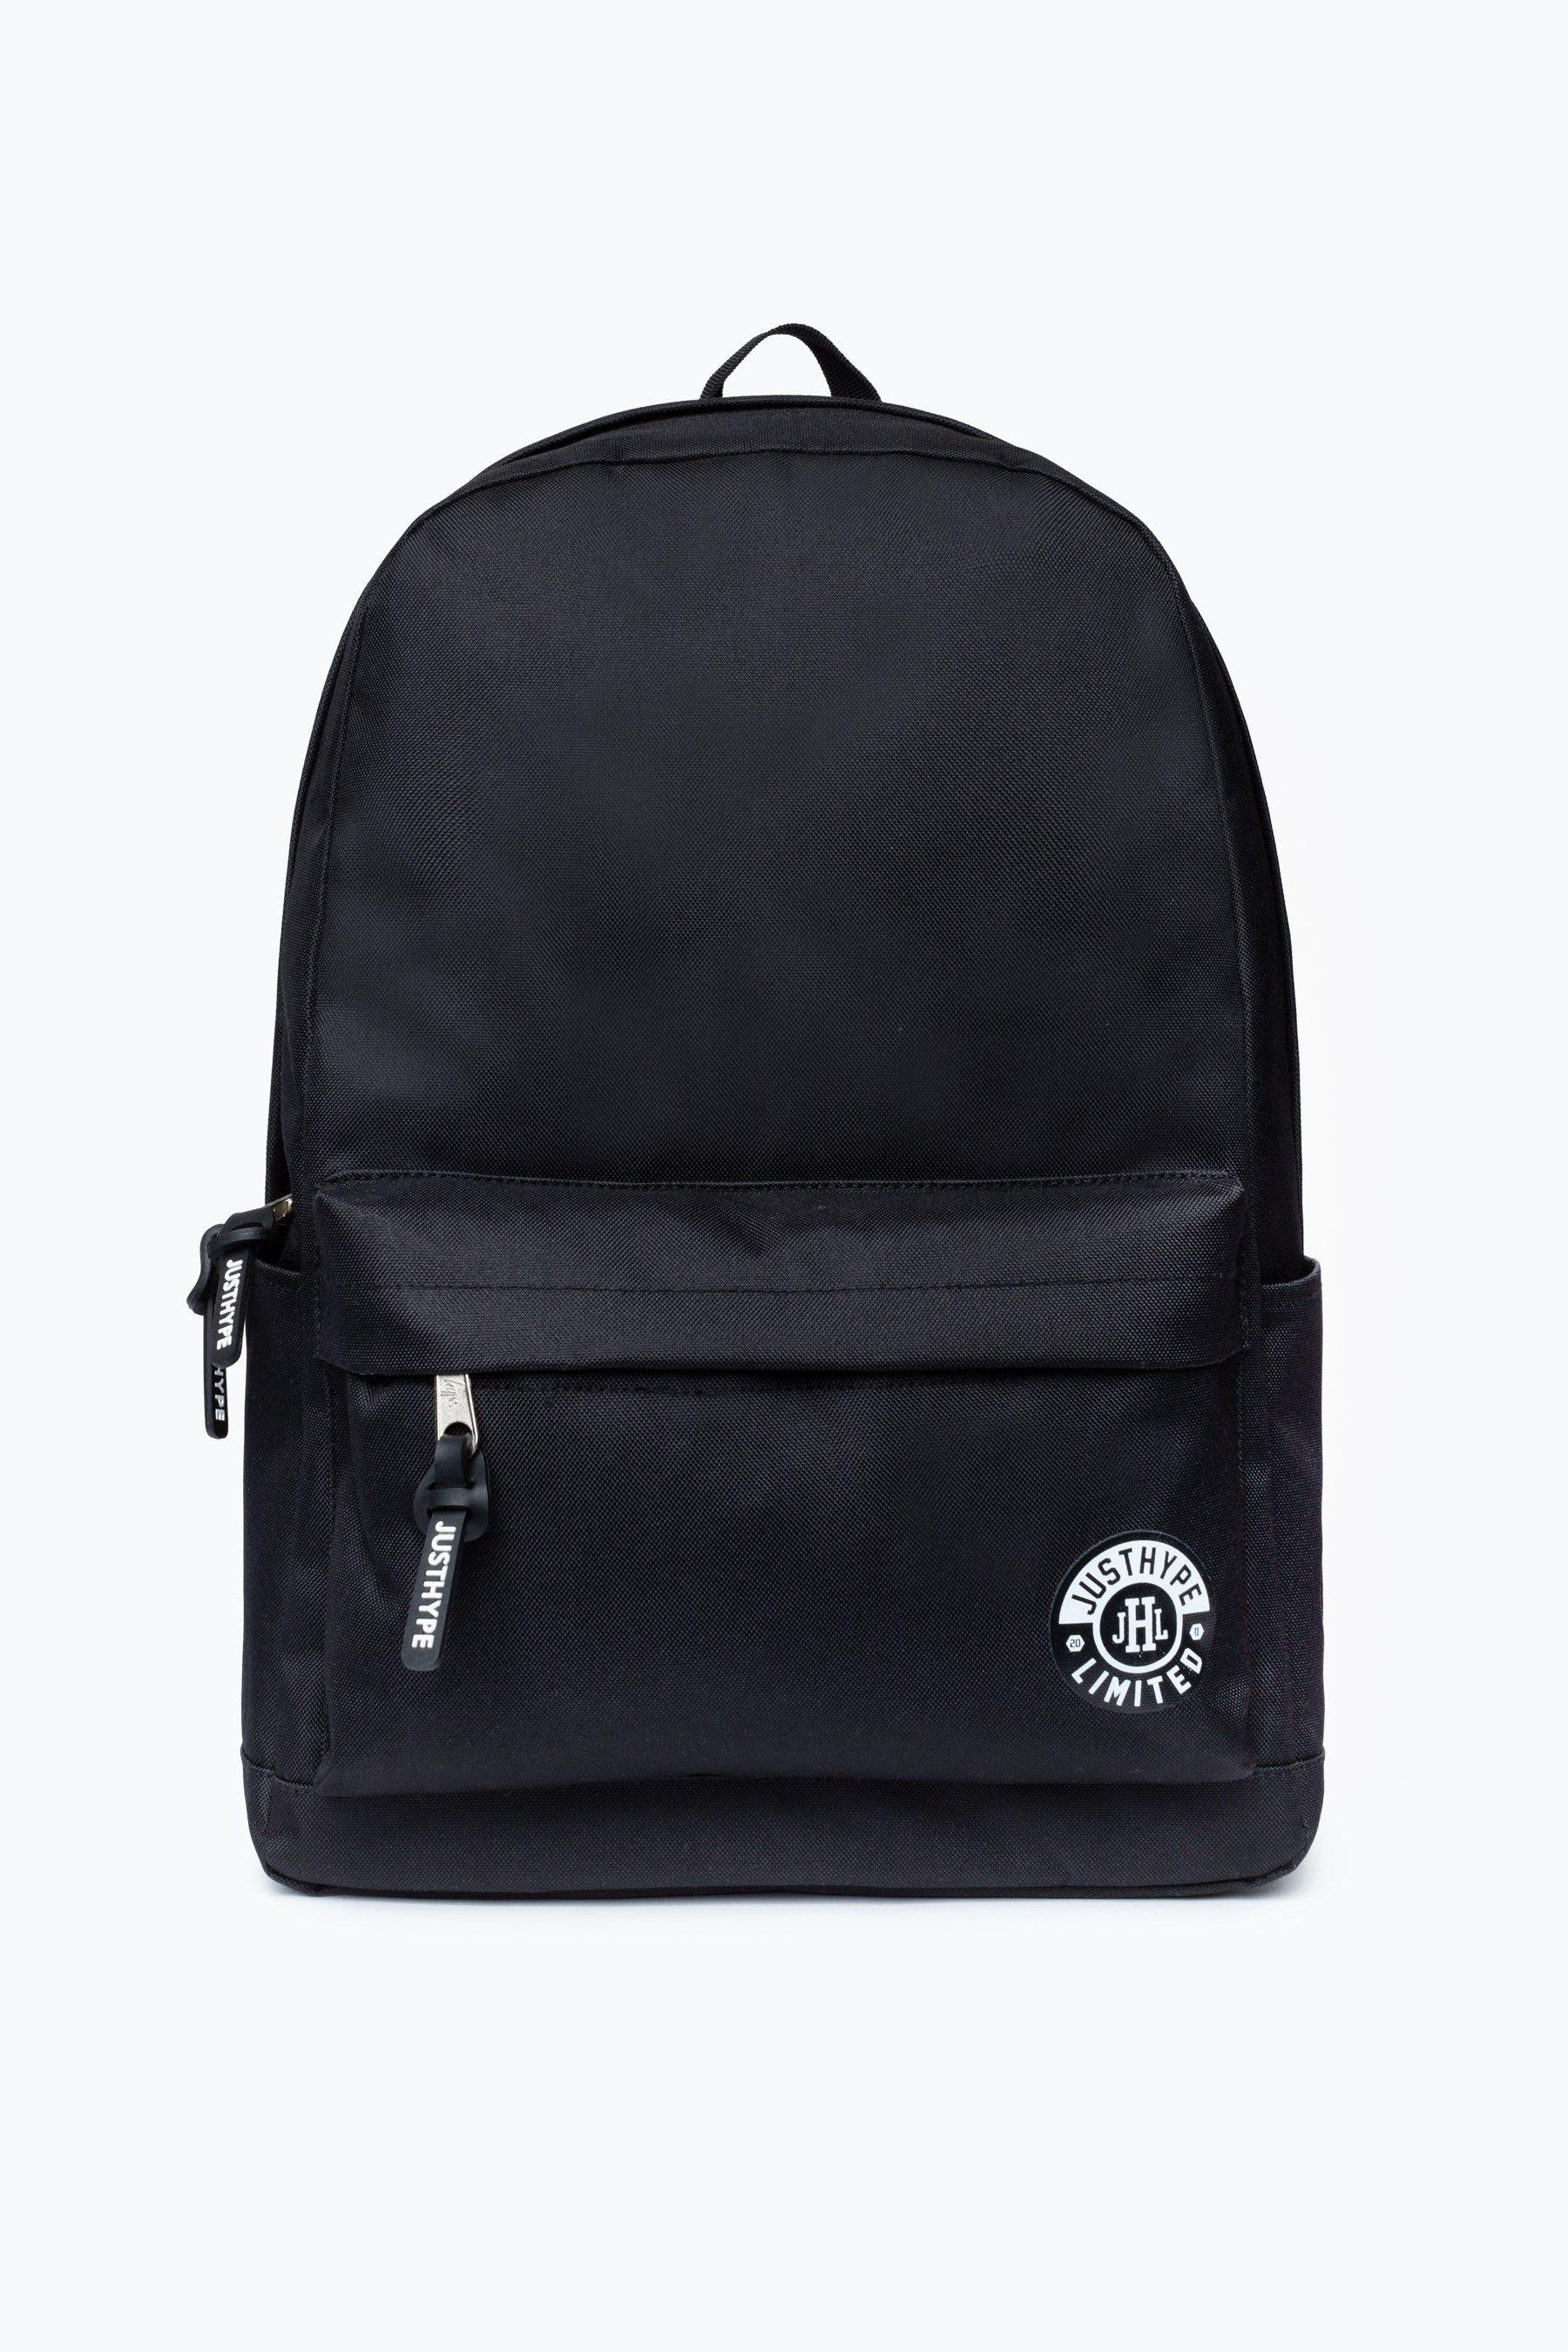 Hype Black Entry Backpack